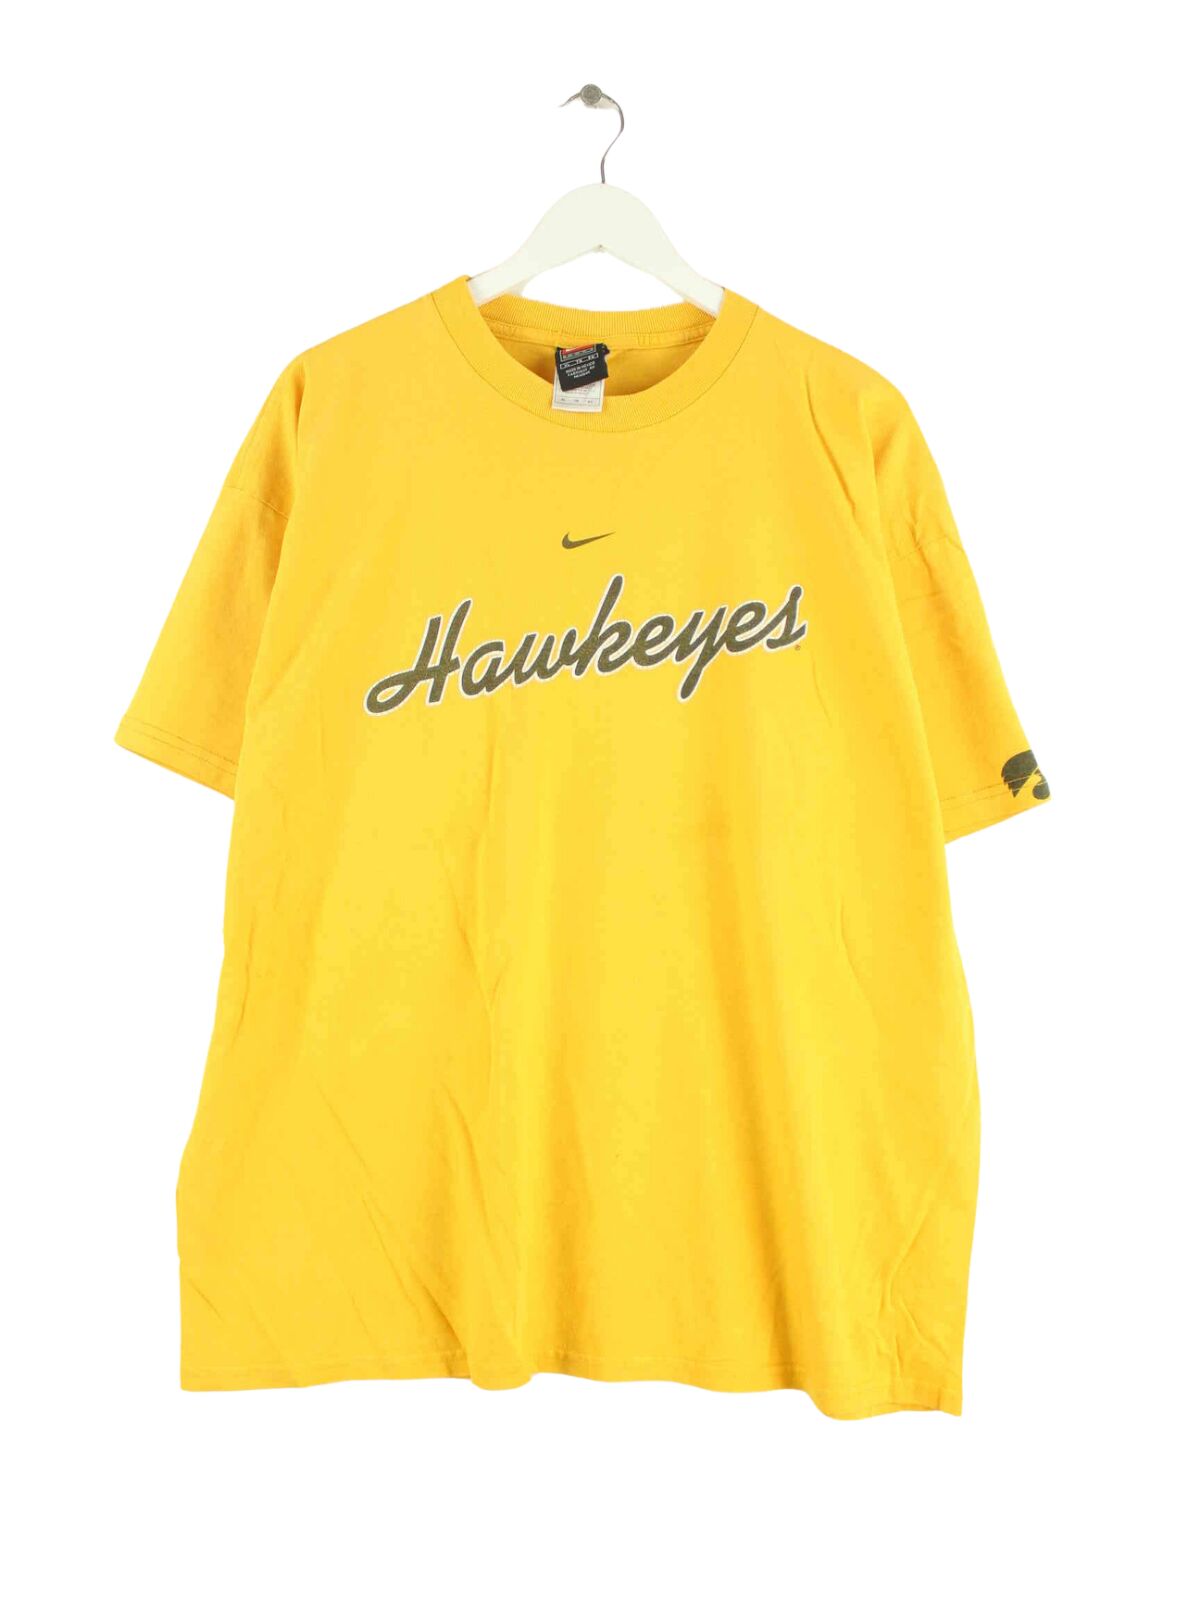 Nike 00s Hawkeys Print T-Shirt Gelb XL (front image)